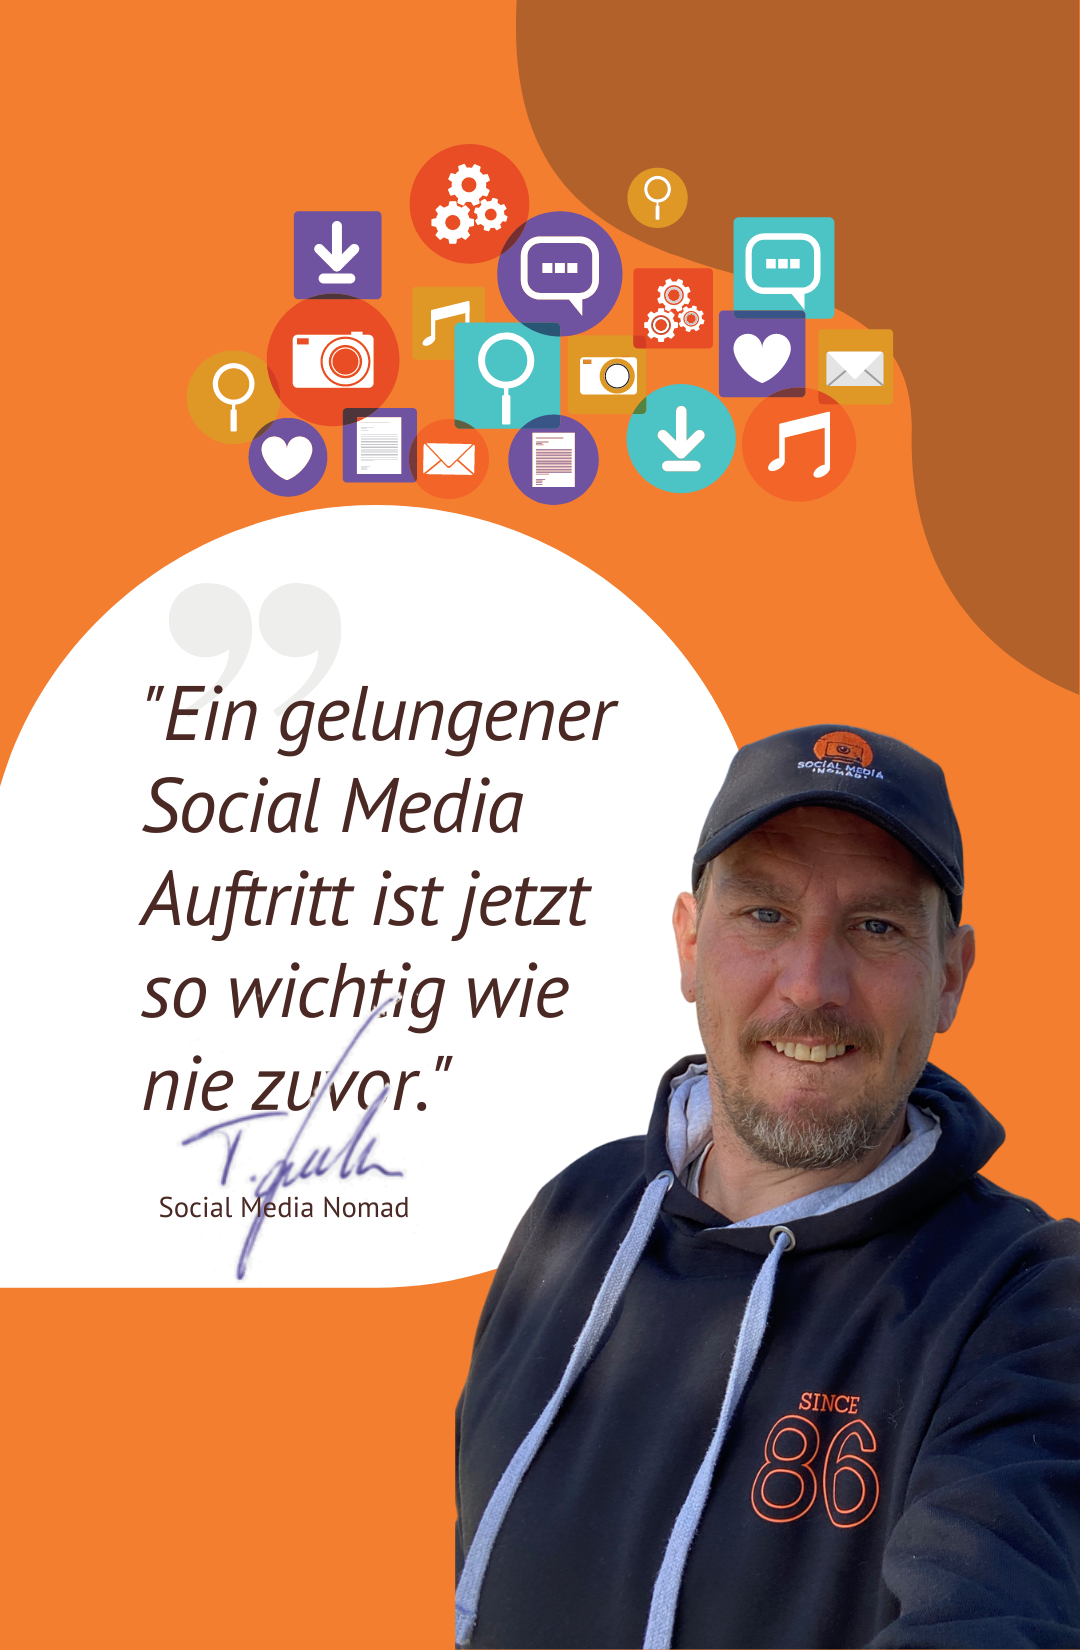 Tobias Frommelt - Social Media Nomad